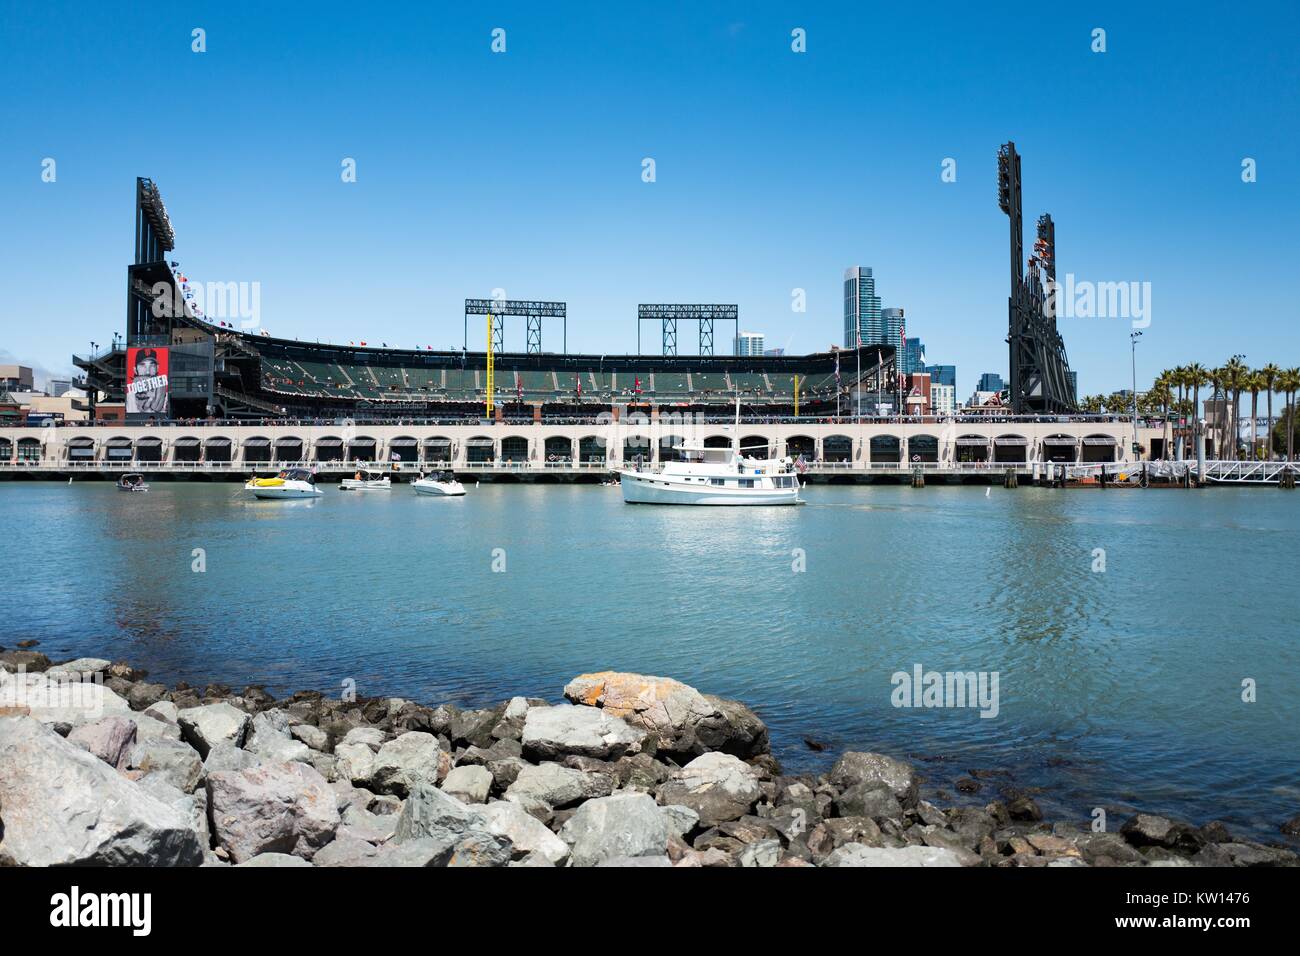 ATT Park baseball stadium, home of the San Francisco Giants baseball team, viewed from across McCovey Cove, San Francisco, California, 2016. Stock Photo